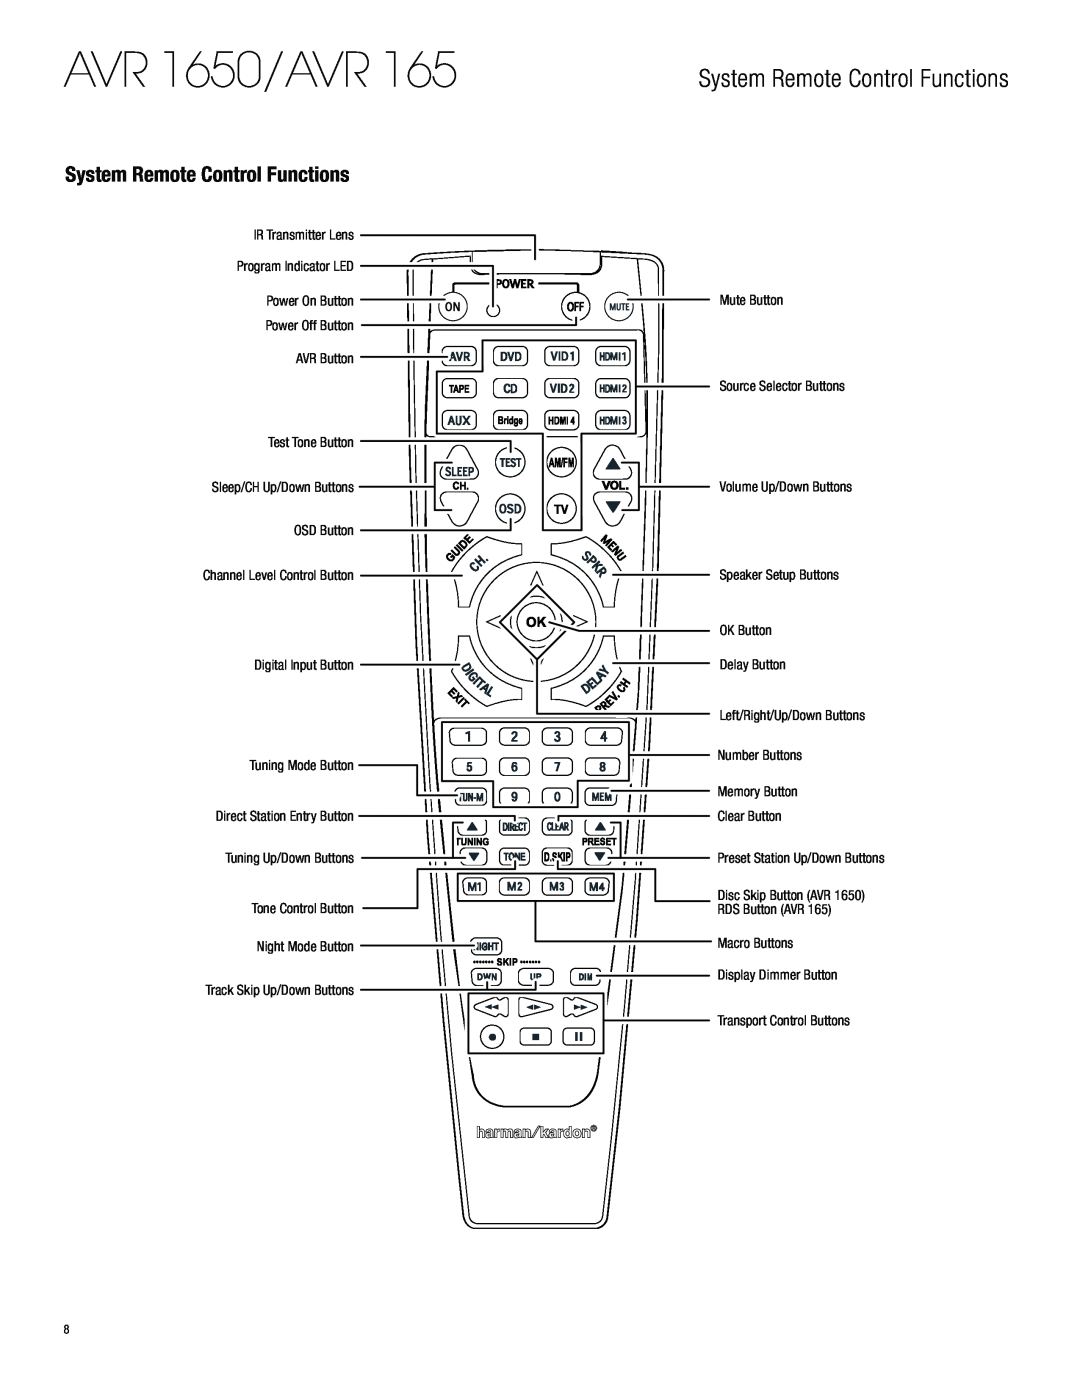 Harman-Kardon owner manual System Remote Control Functions, AVR 1650/AVR 